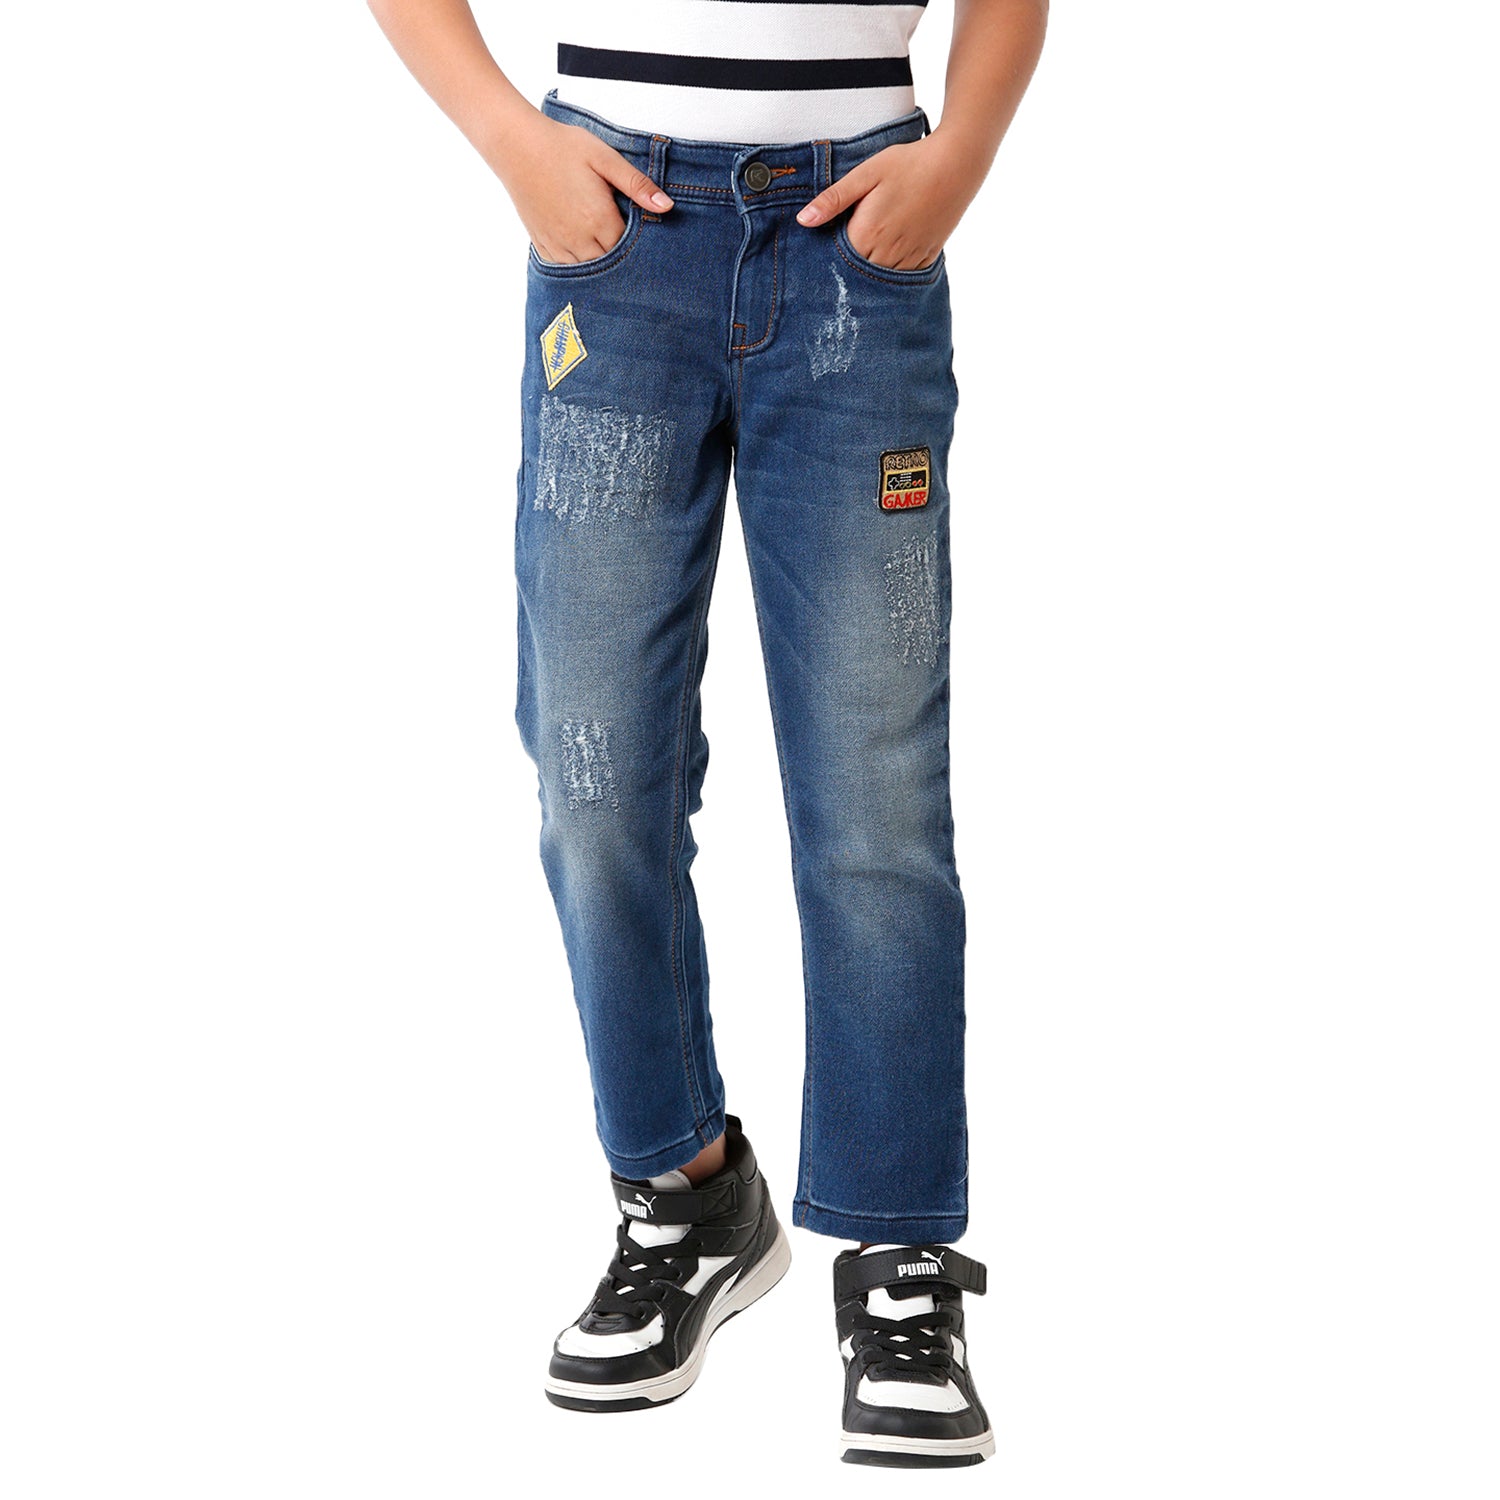 Classic Polo Bro Boys Cotton Solid Slim Fit Blue Color Denim Jeans - BBD S1 02B Classic Polo 